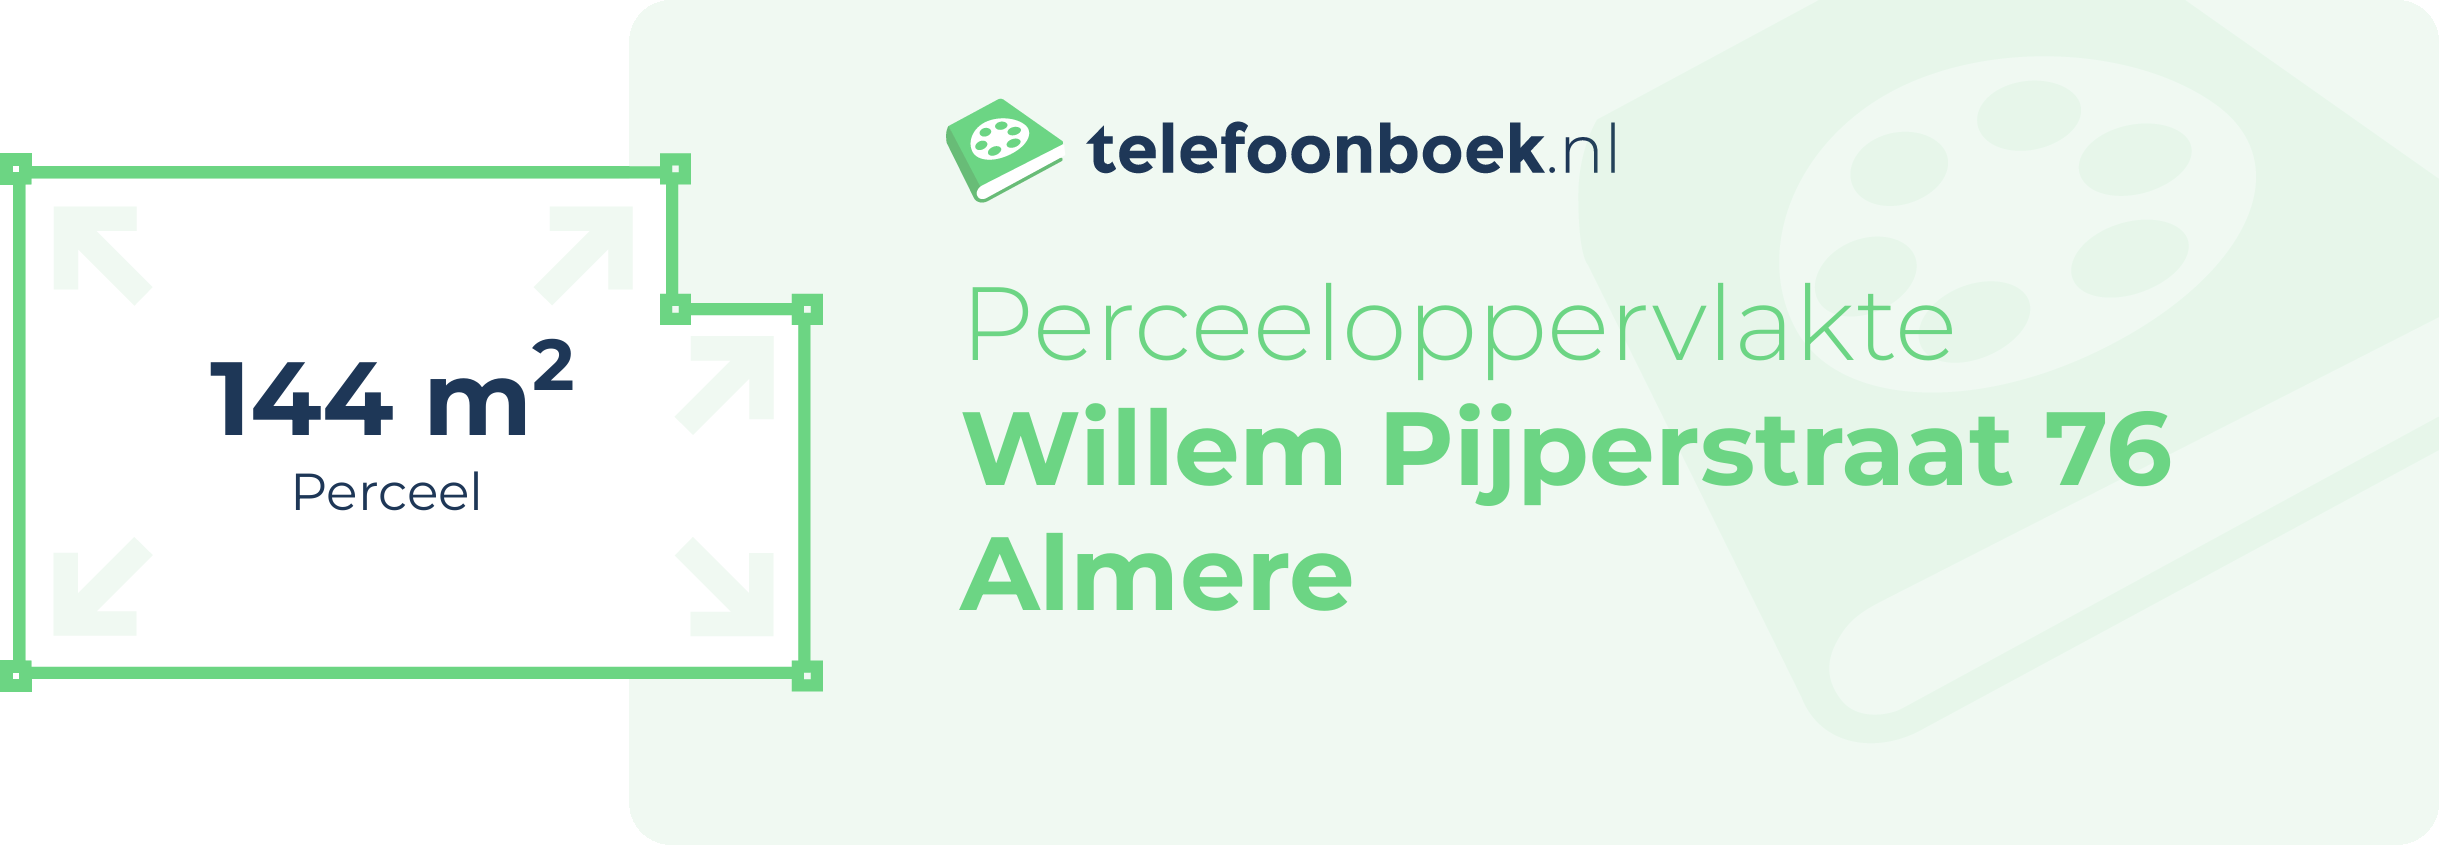 Perceeloppervlakte Willem Pijperstraat 76 Almere